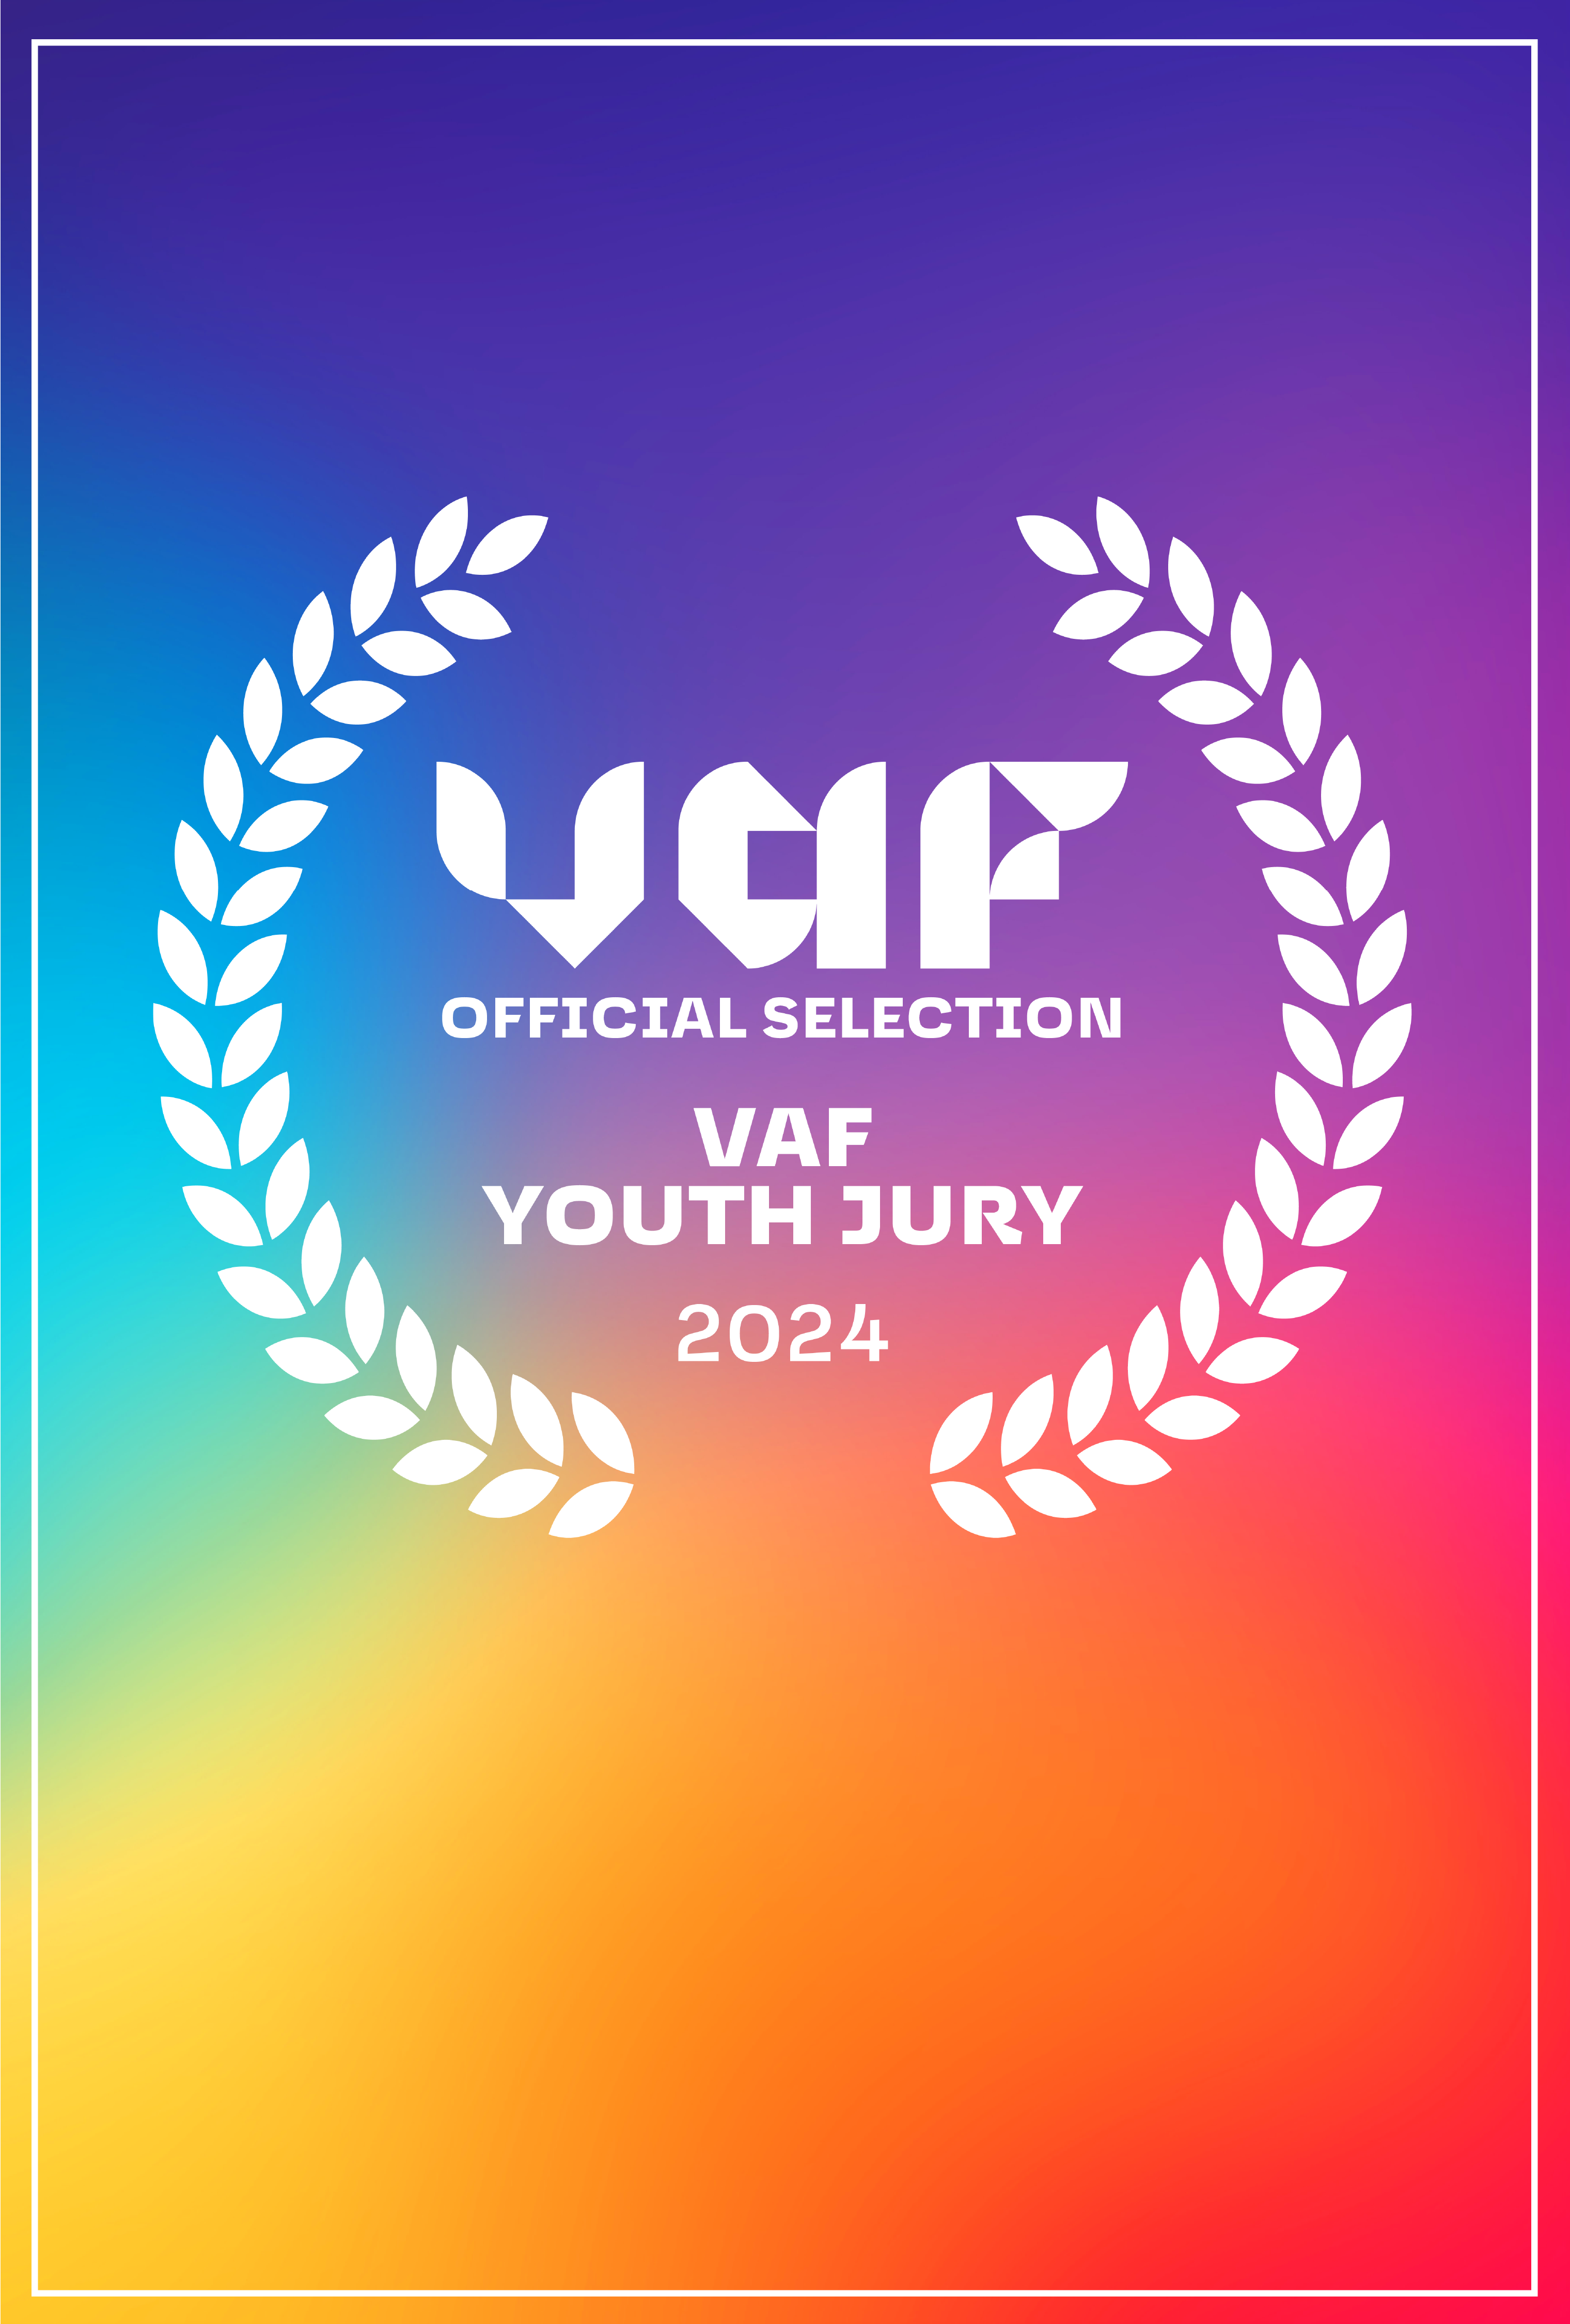 Laurel på en regnbue baggrund med teksten VAF Youth Jury 2024